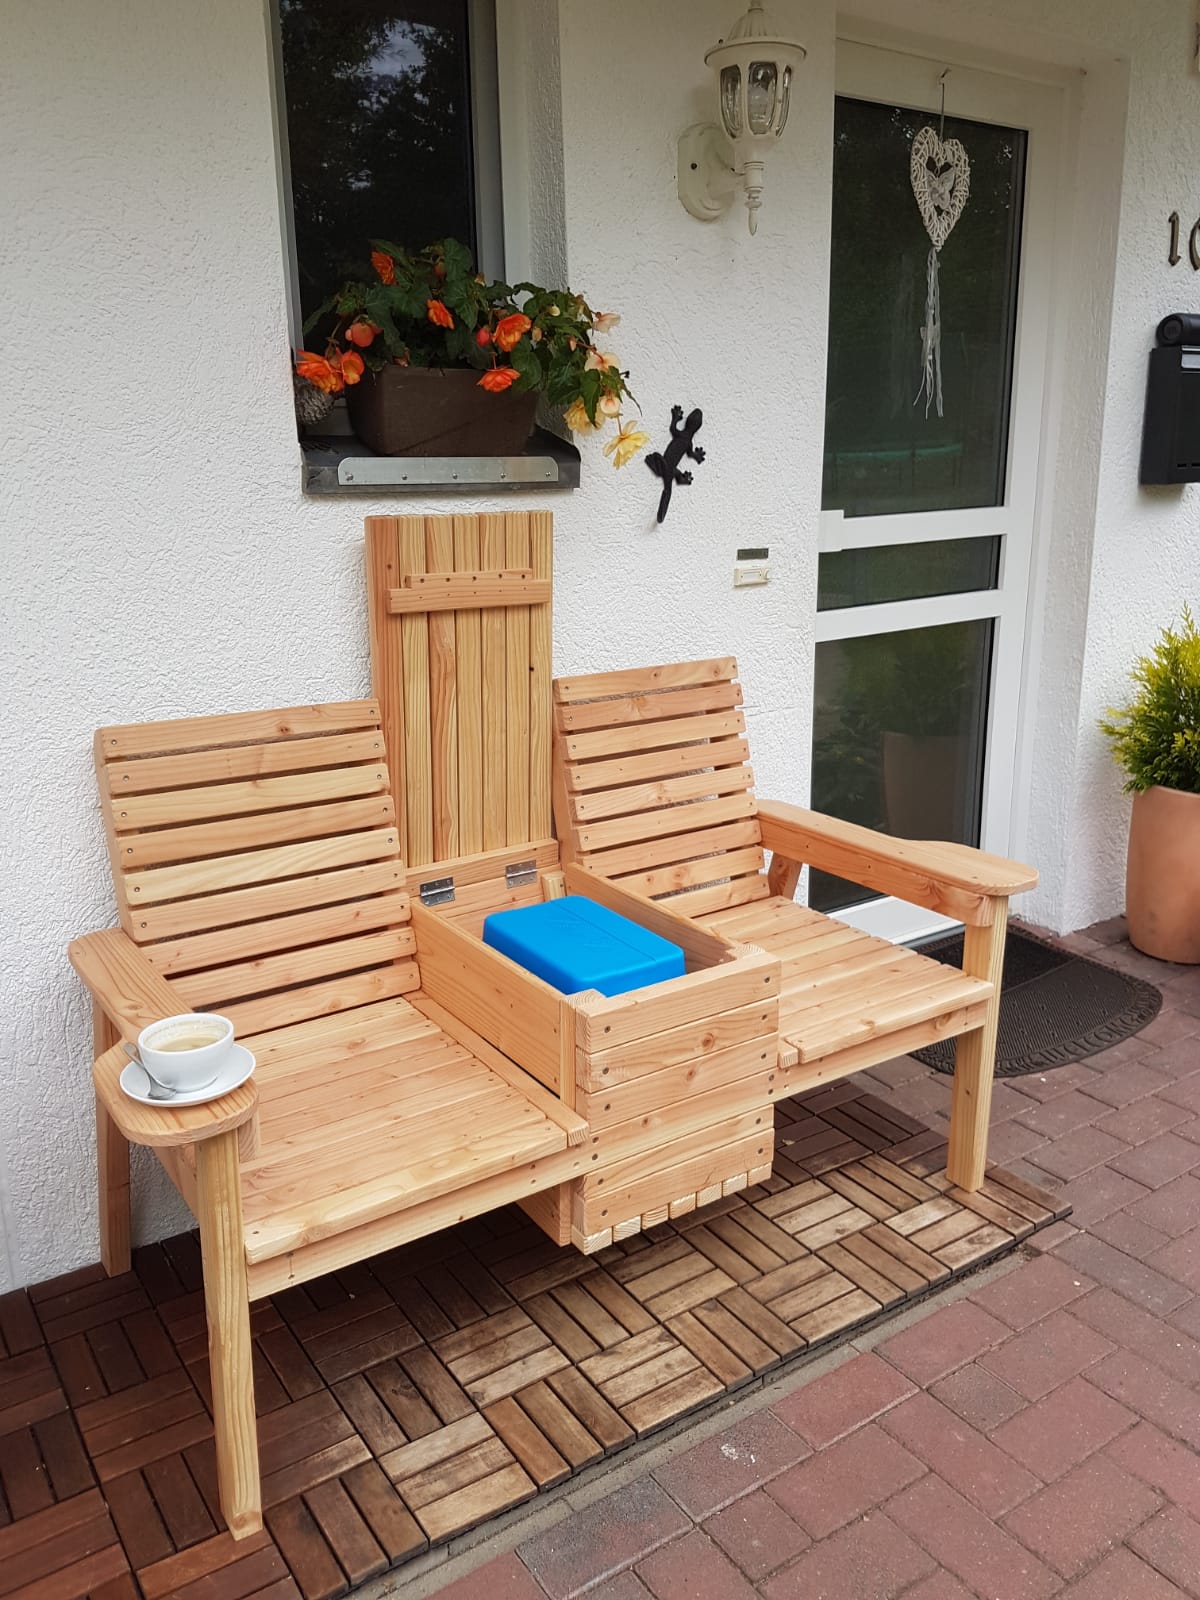 DIY Double Chair Bench with Cooler MyOutdoorPlans Free 